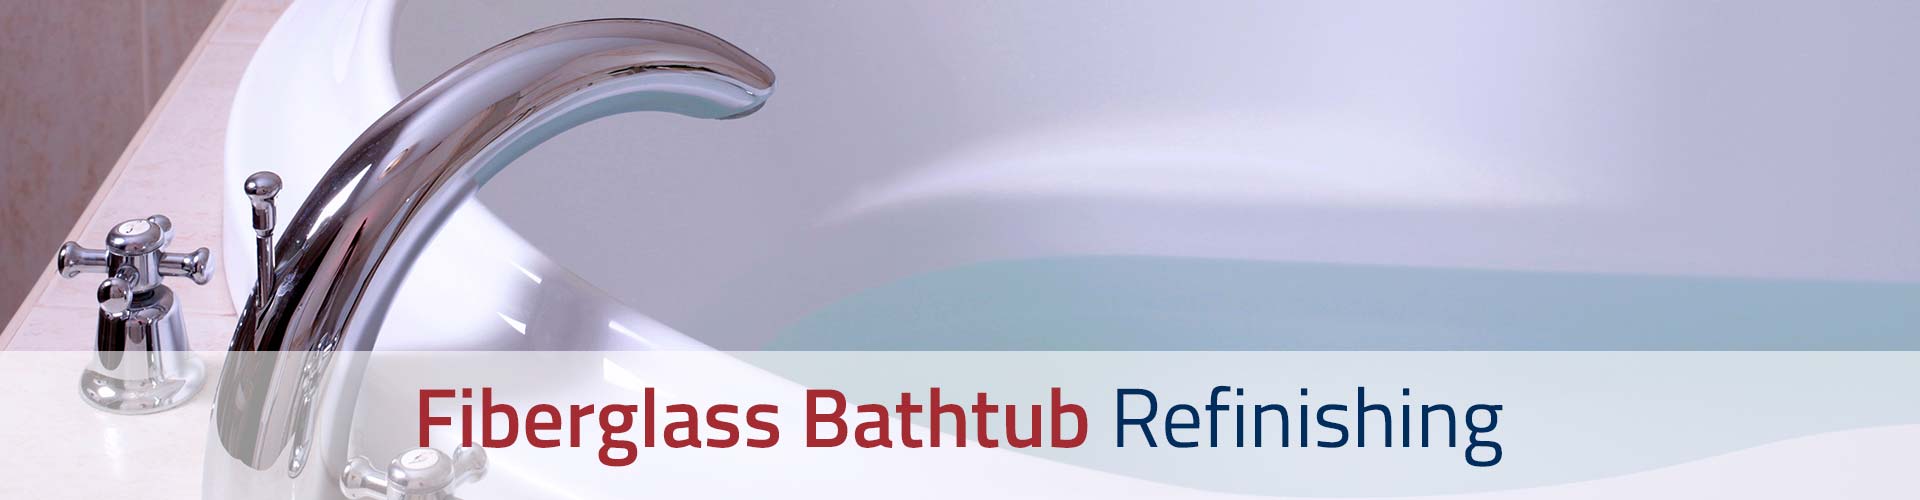 Fiberglass Bathtub Refinishing Marlton NJ